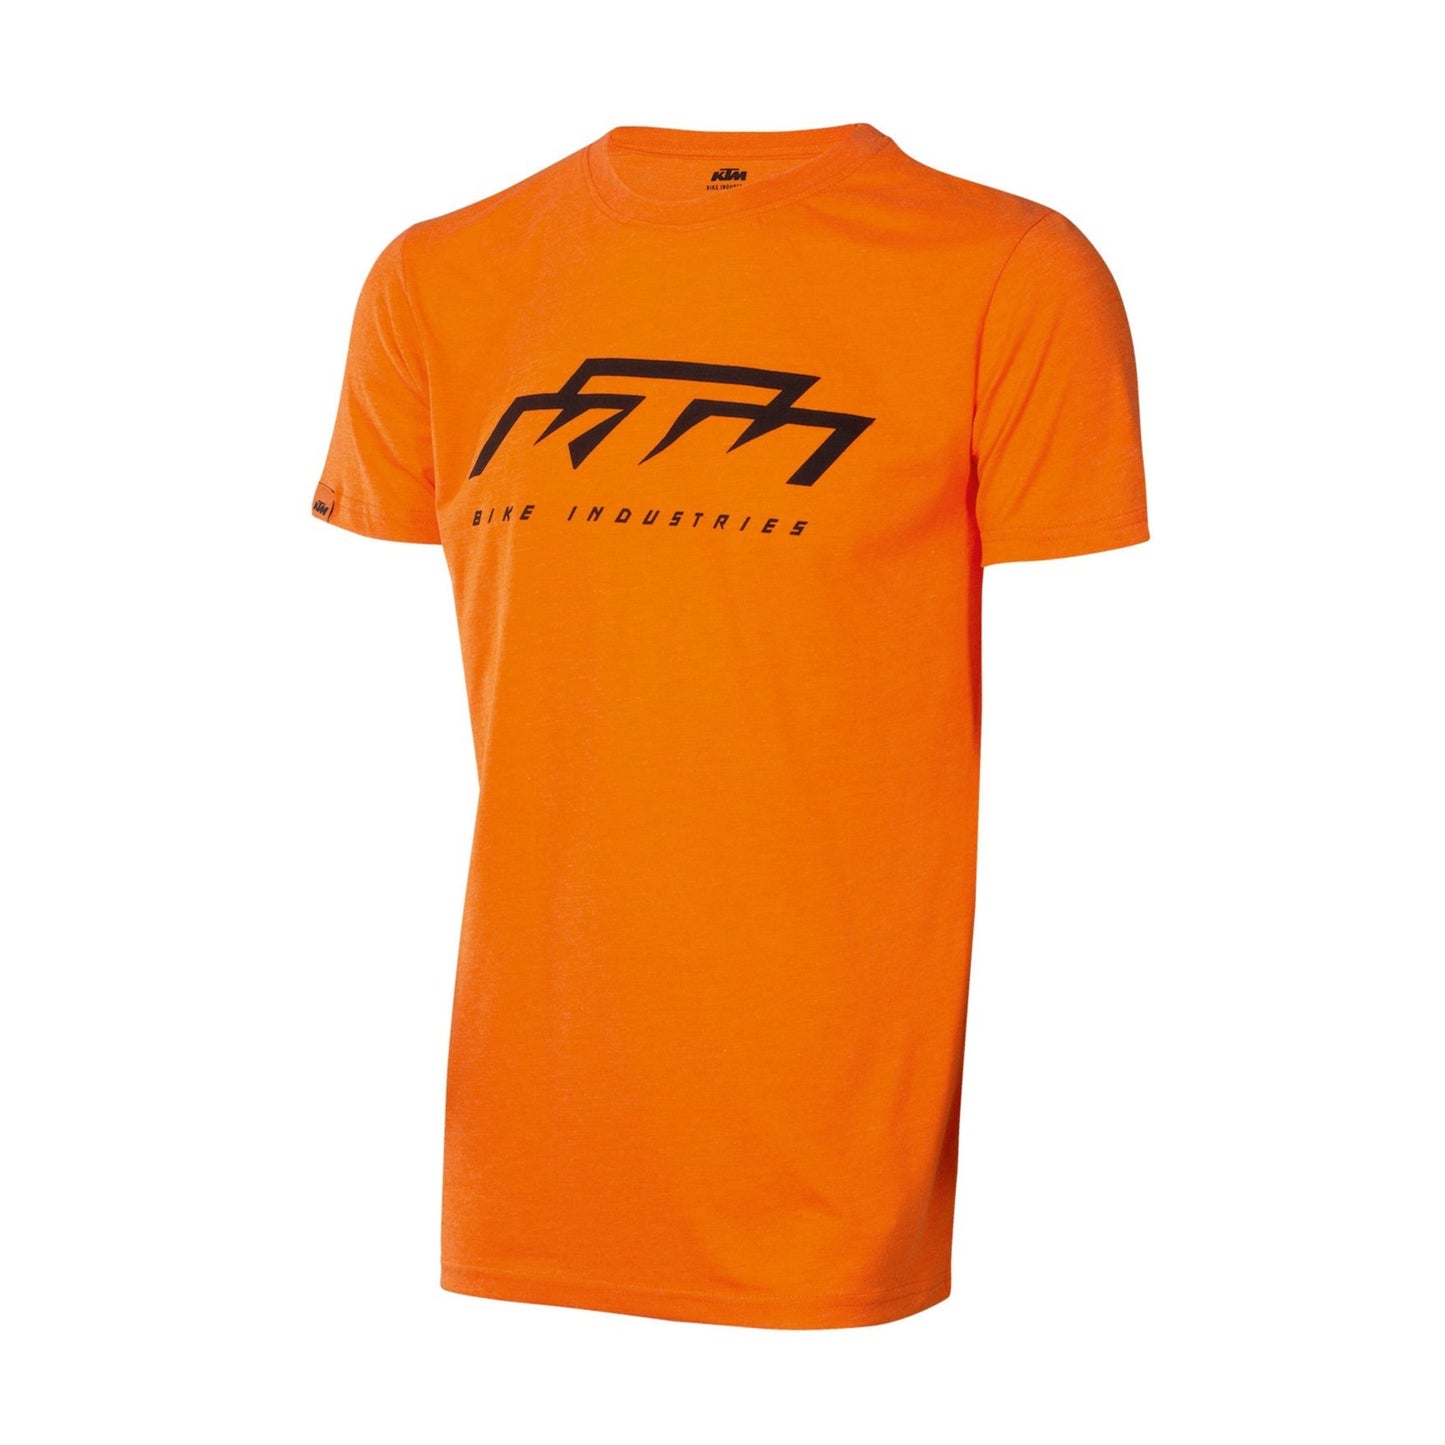 Camiseta ciclismo casual KTM Factory Team BI Naranja